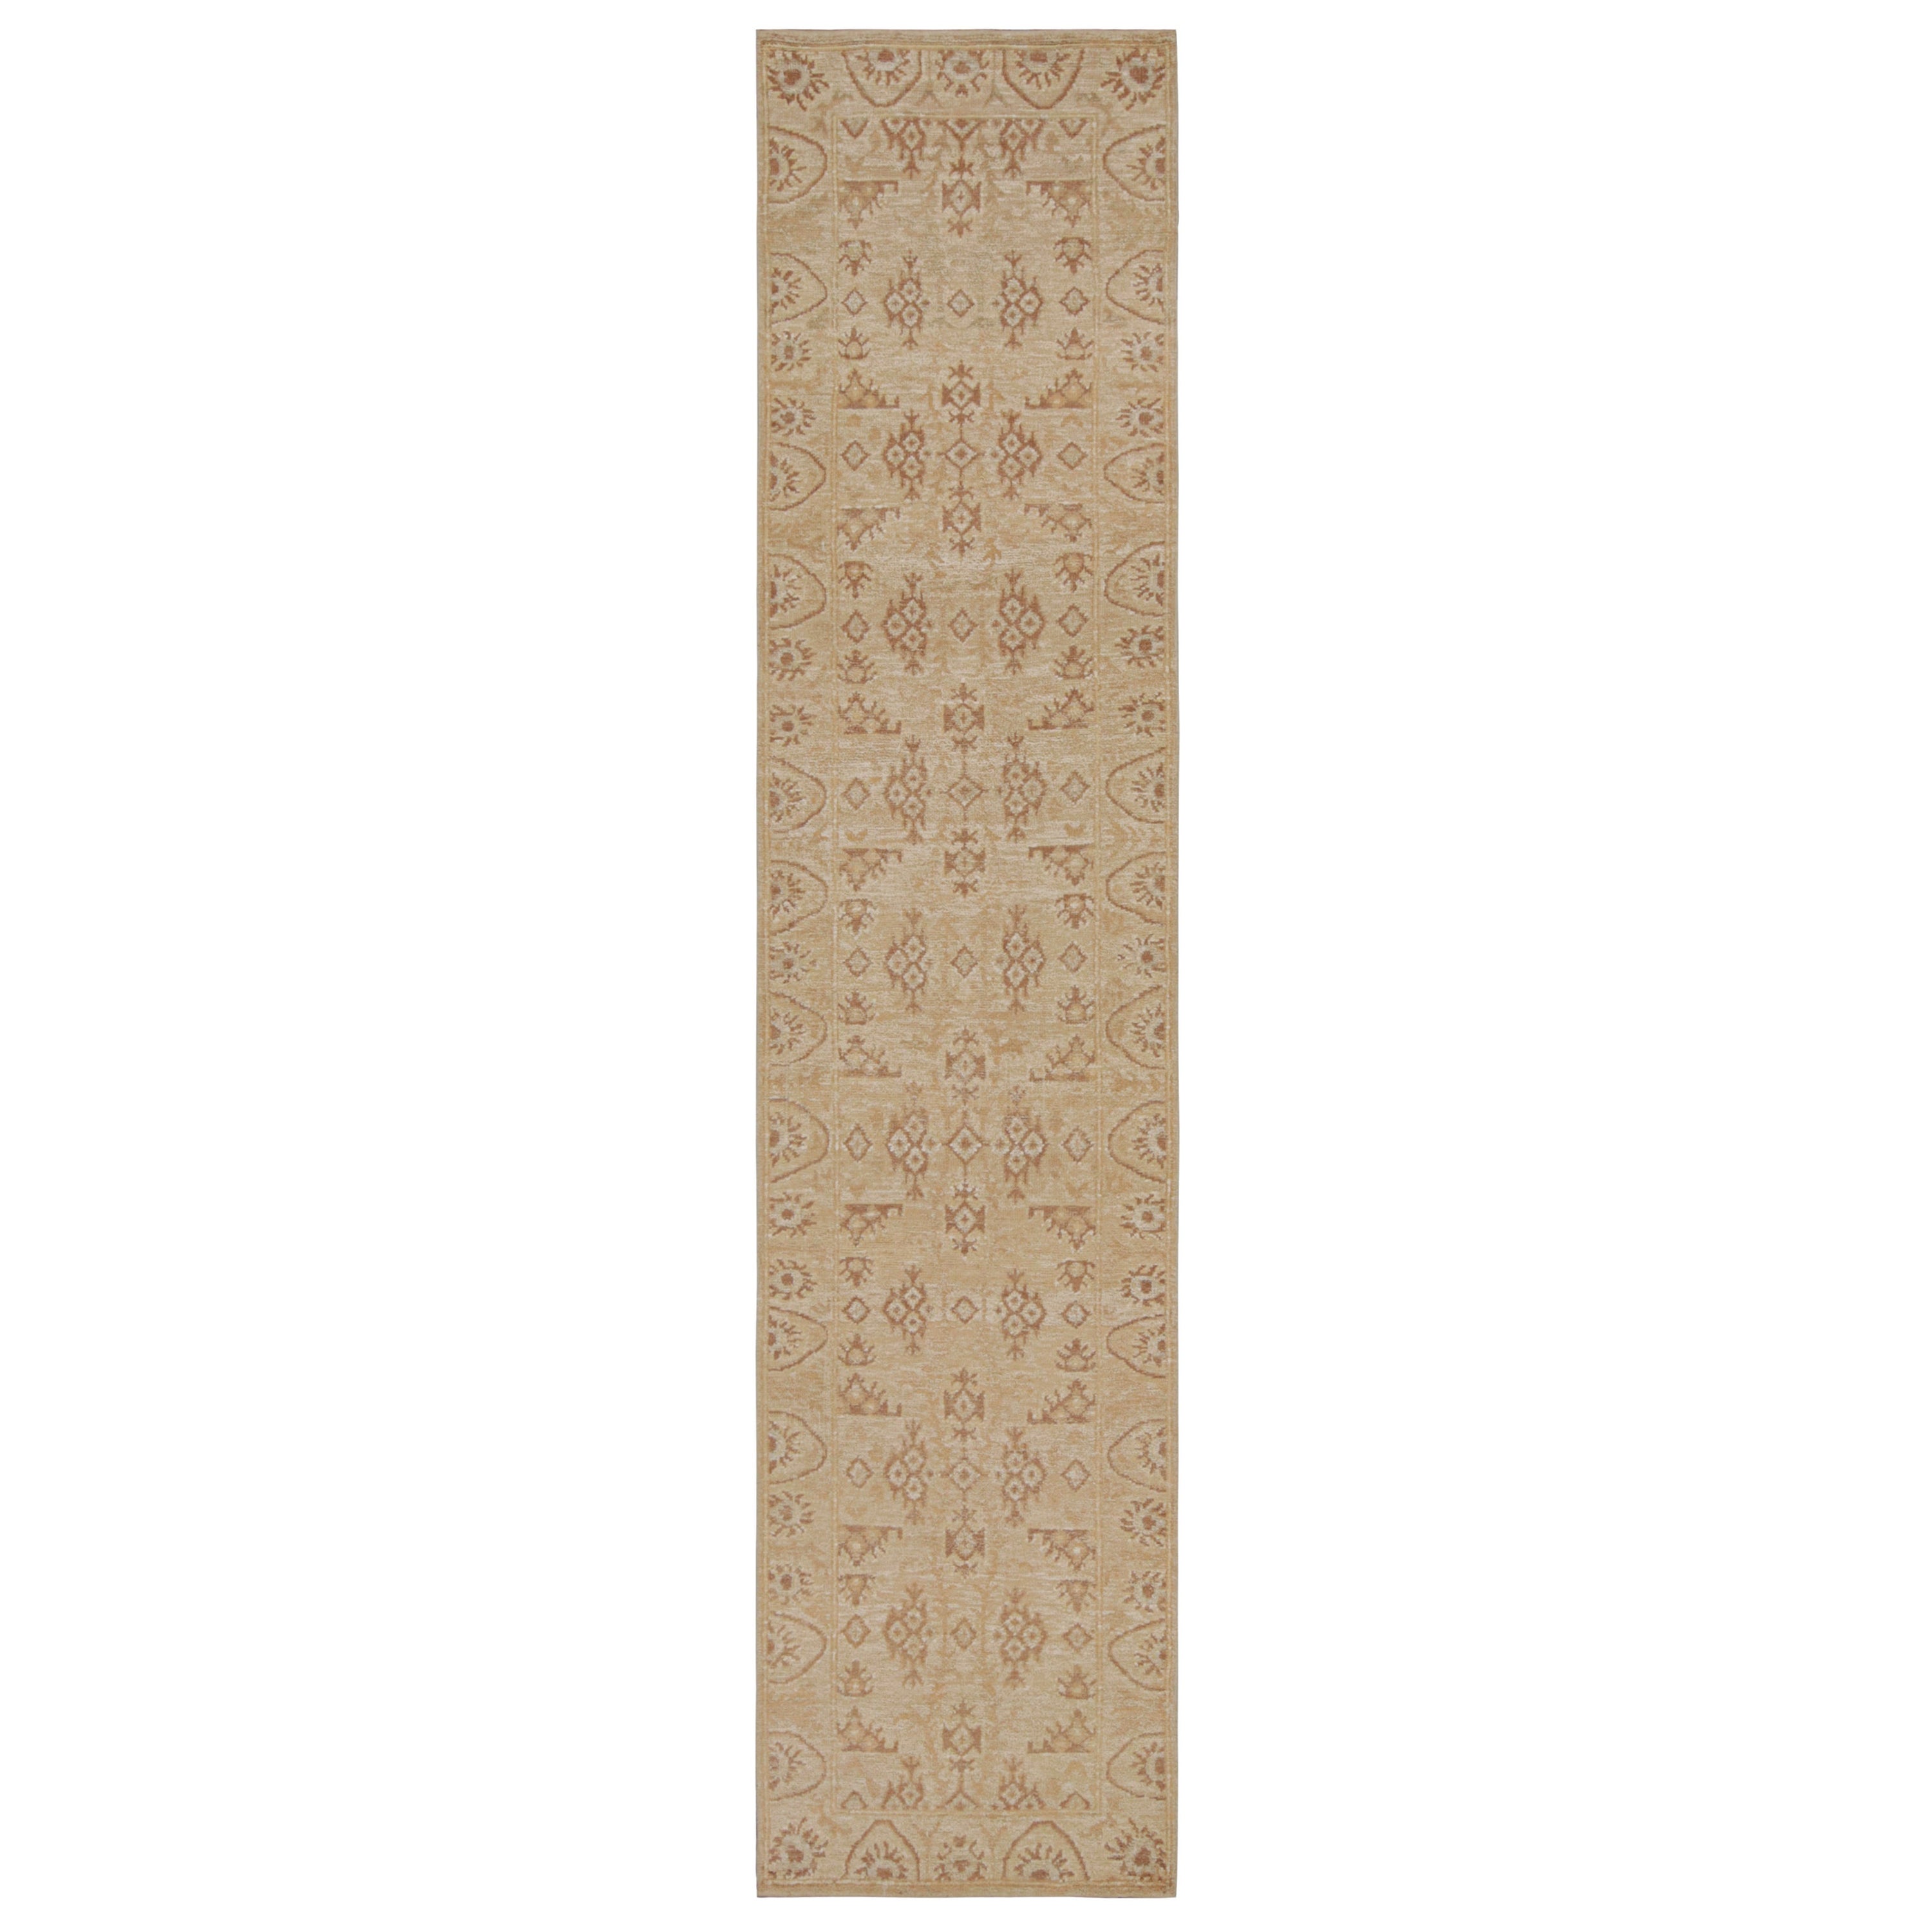 Rug & Kilim’s Oushak Style Rug in Beige-Brown Floral Pattern